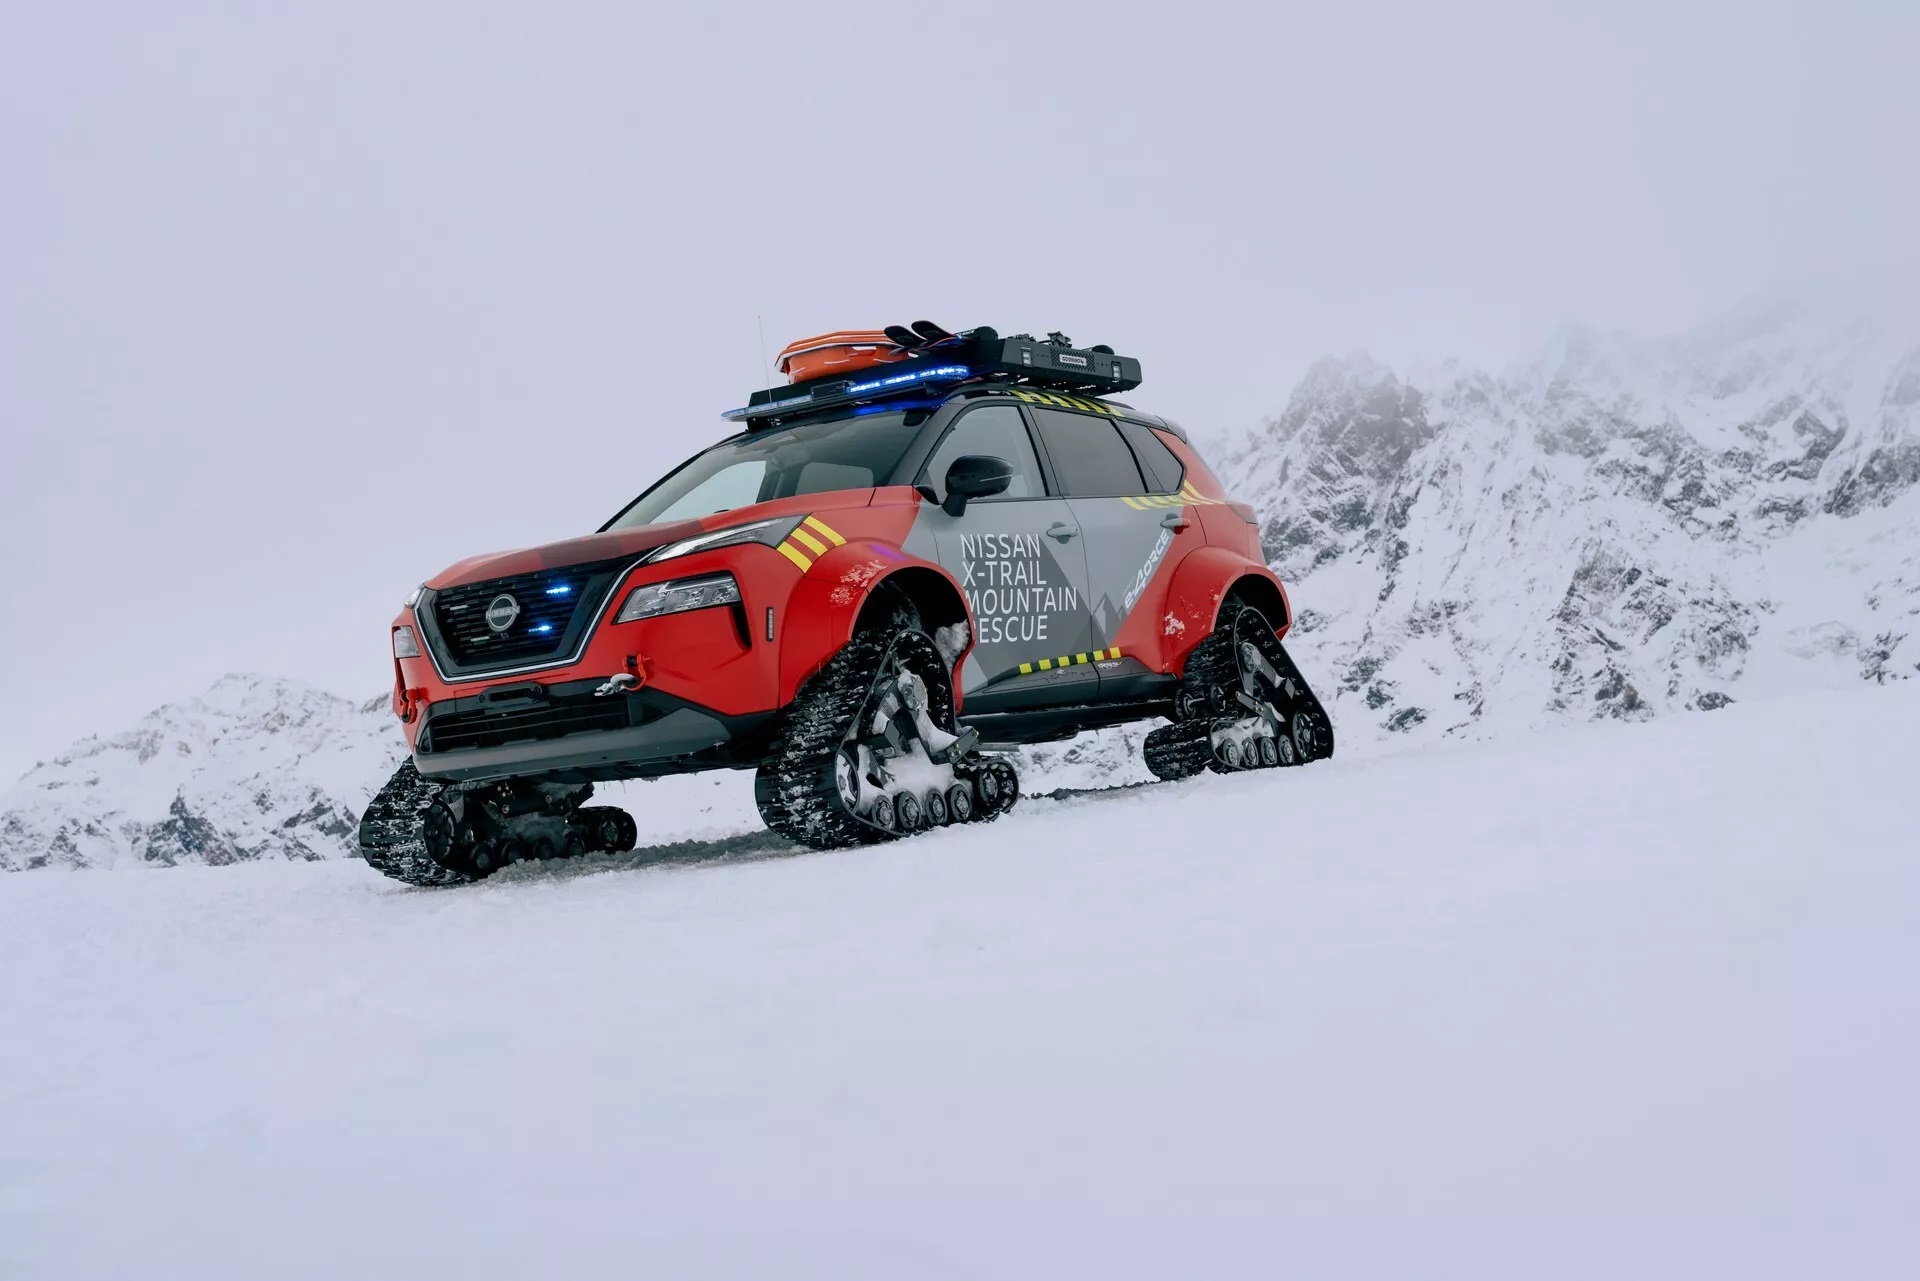 Nissan X-Trail Mountain Rescue: Σε ρόλο διασώστη